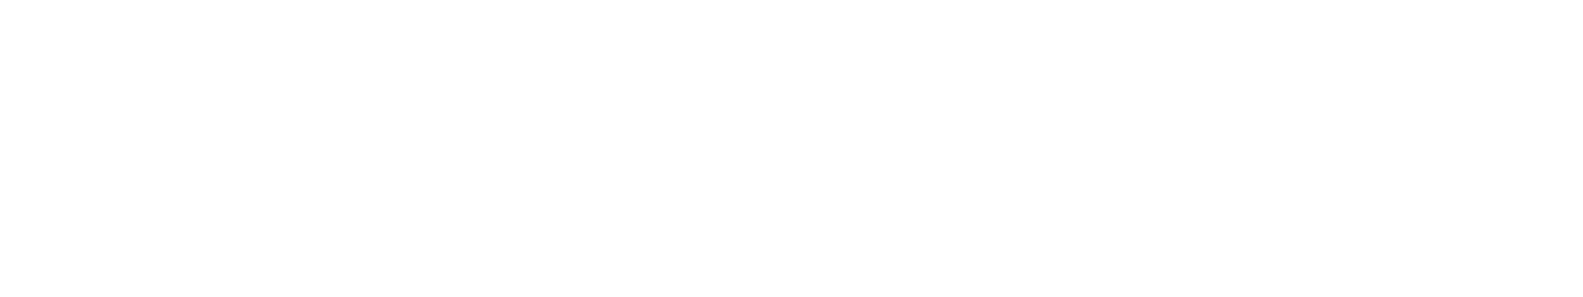 Starburst-Logo-White-svg